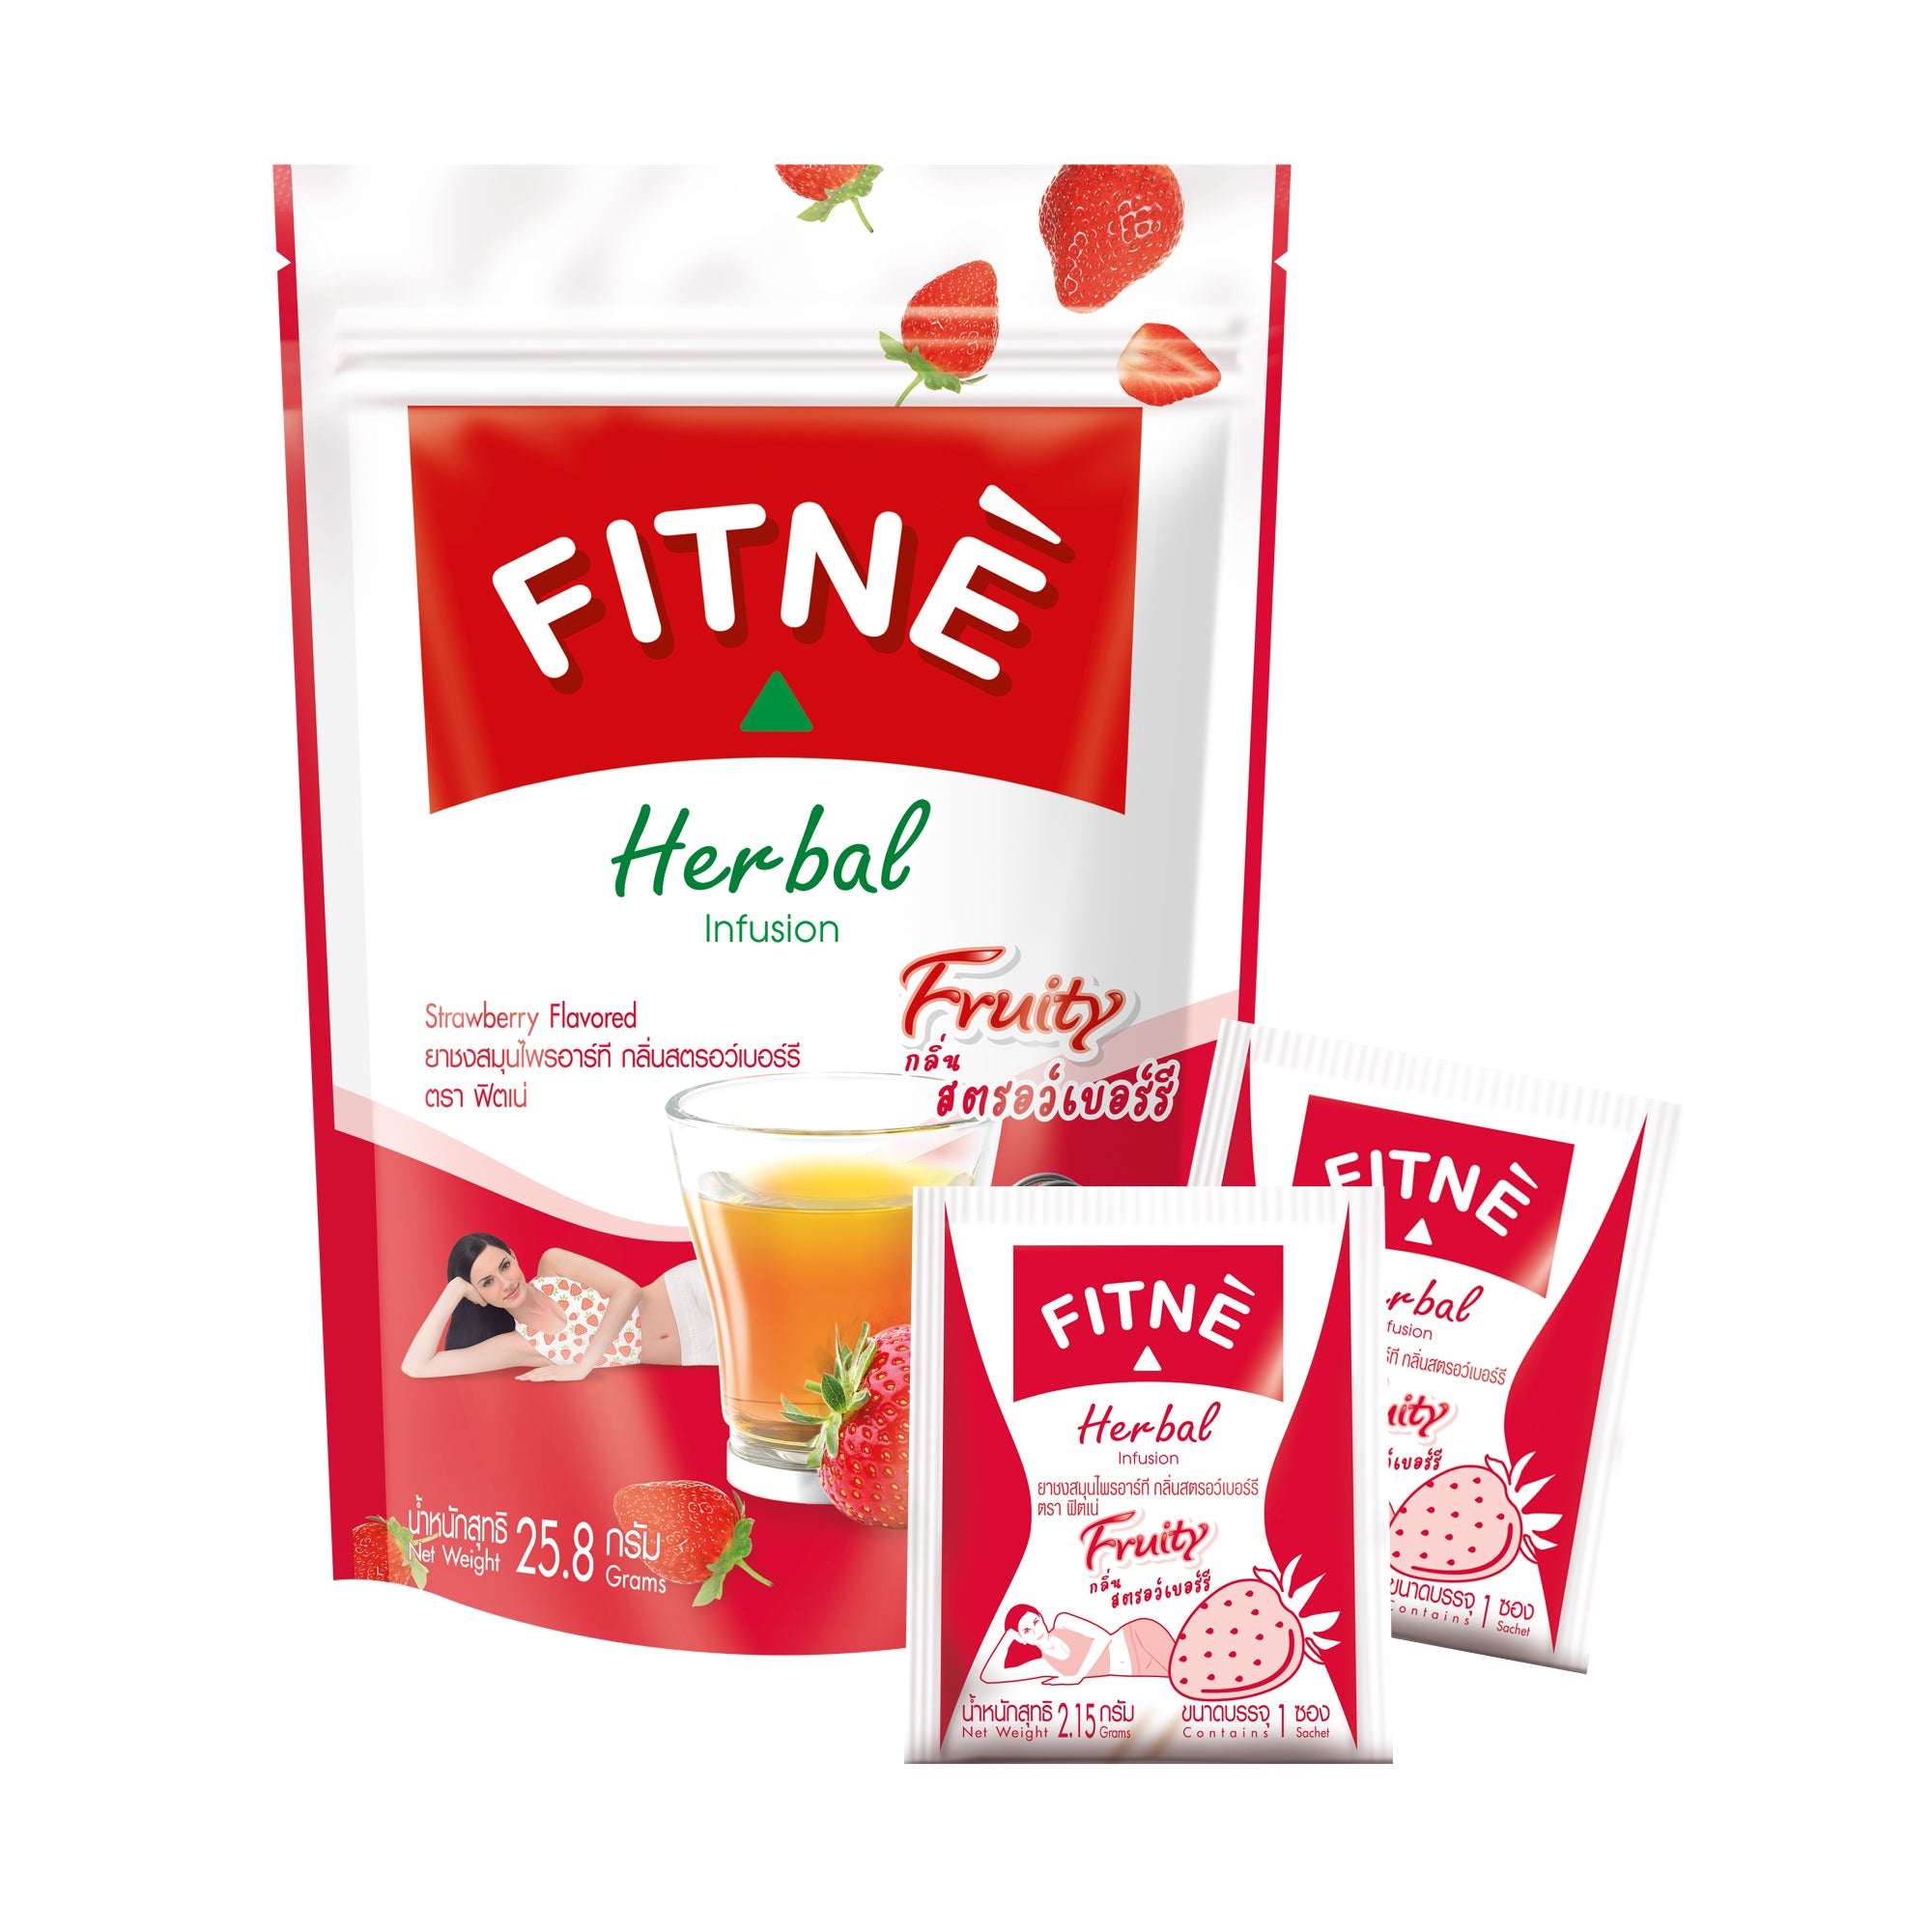 Shop FITNE Strawberry Senna Cleanse Detox Tea, Sweetened with Stevia - FITNÈ